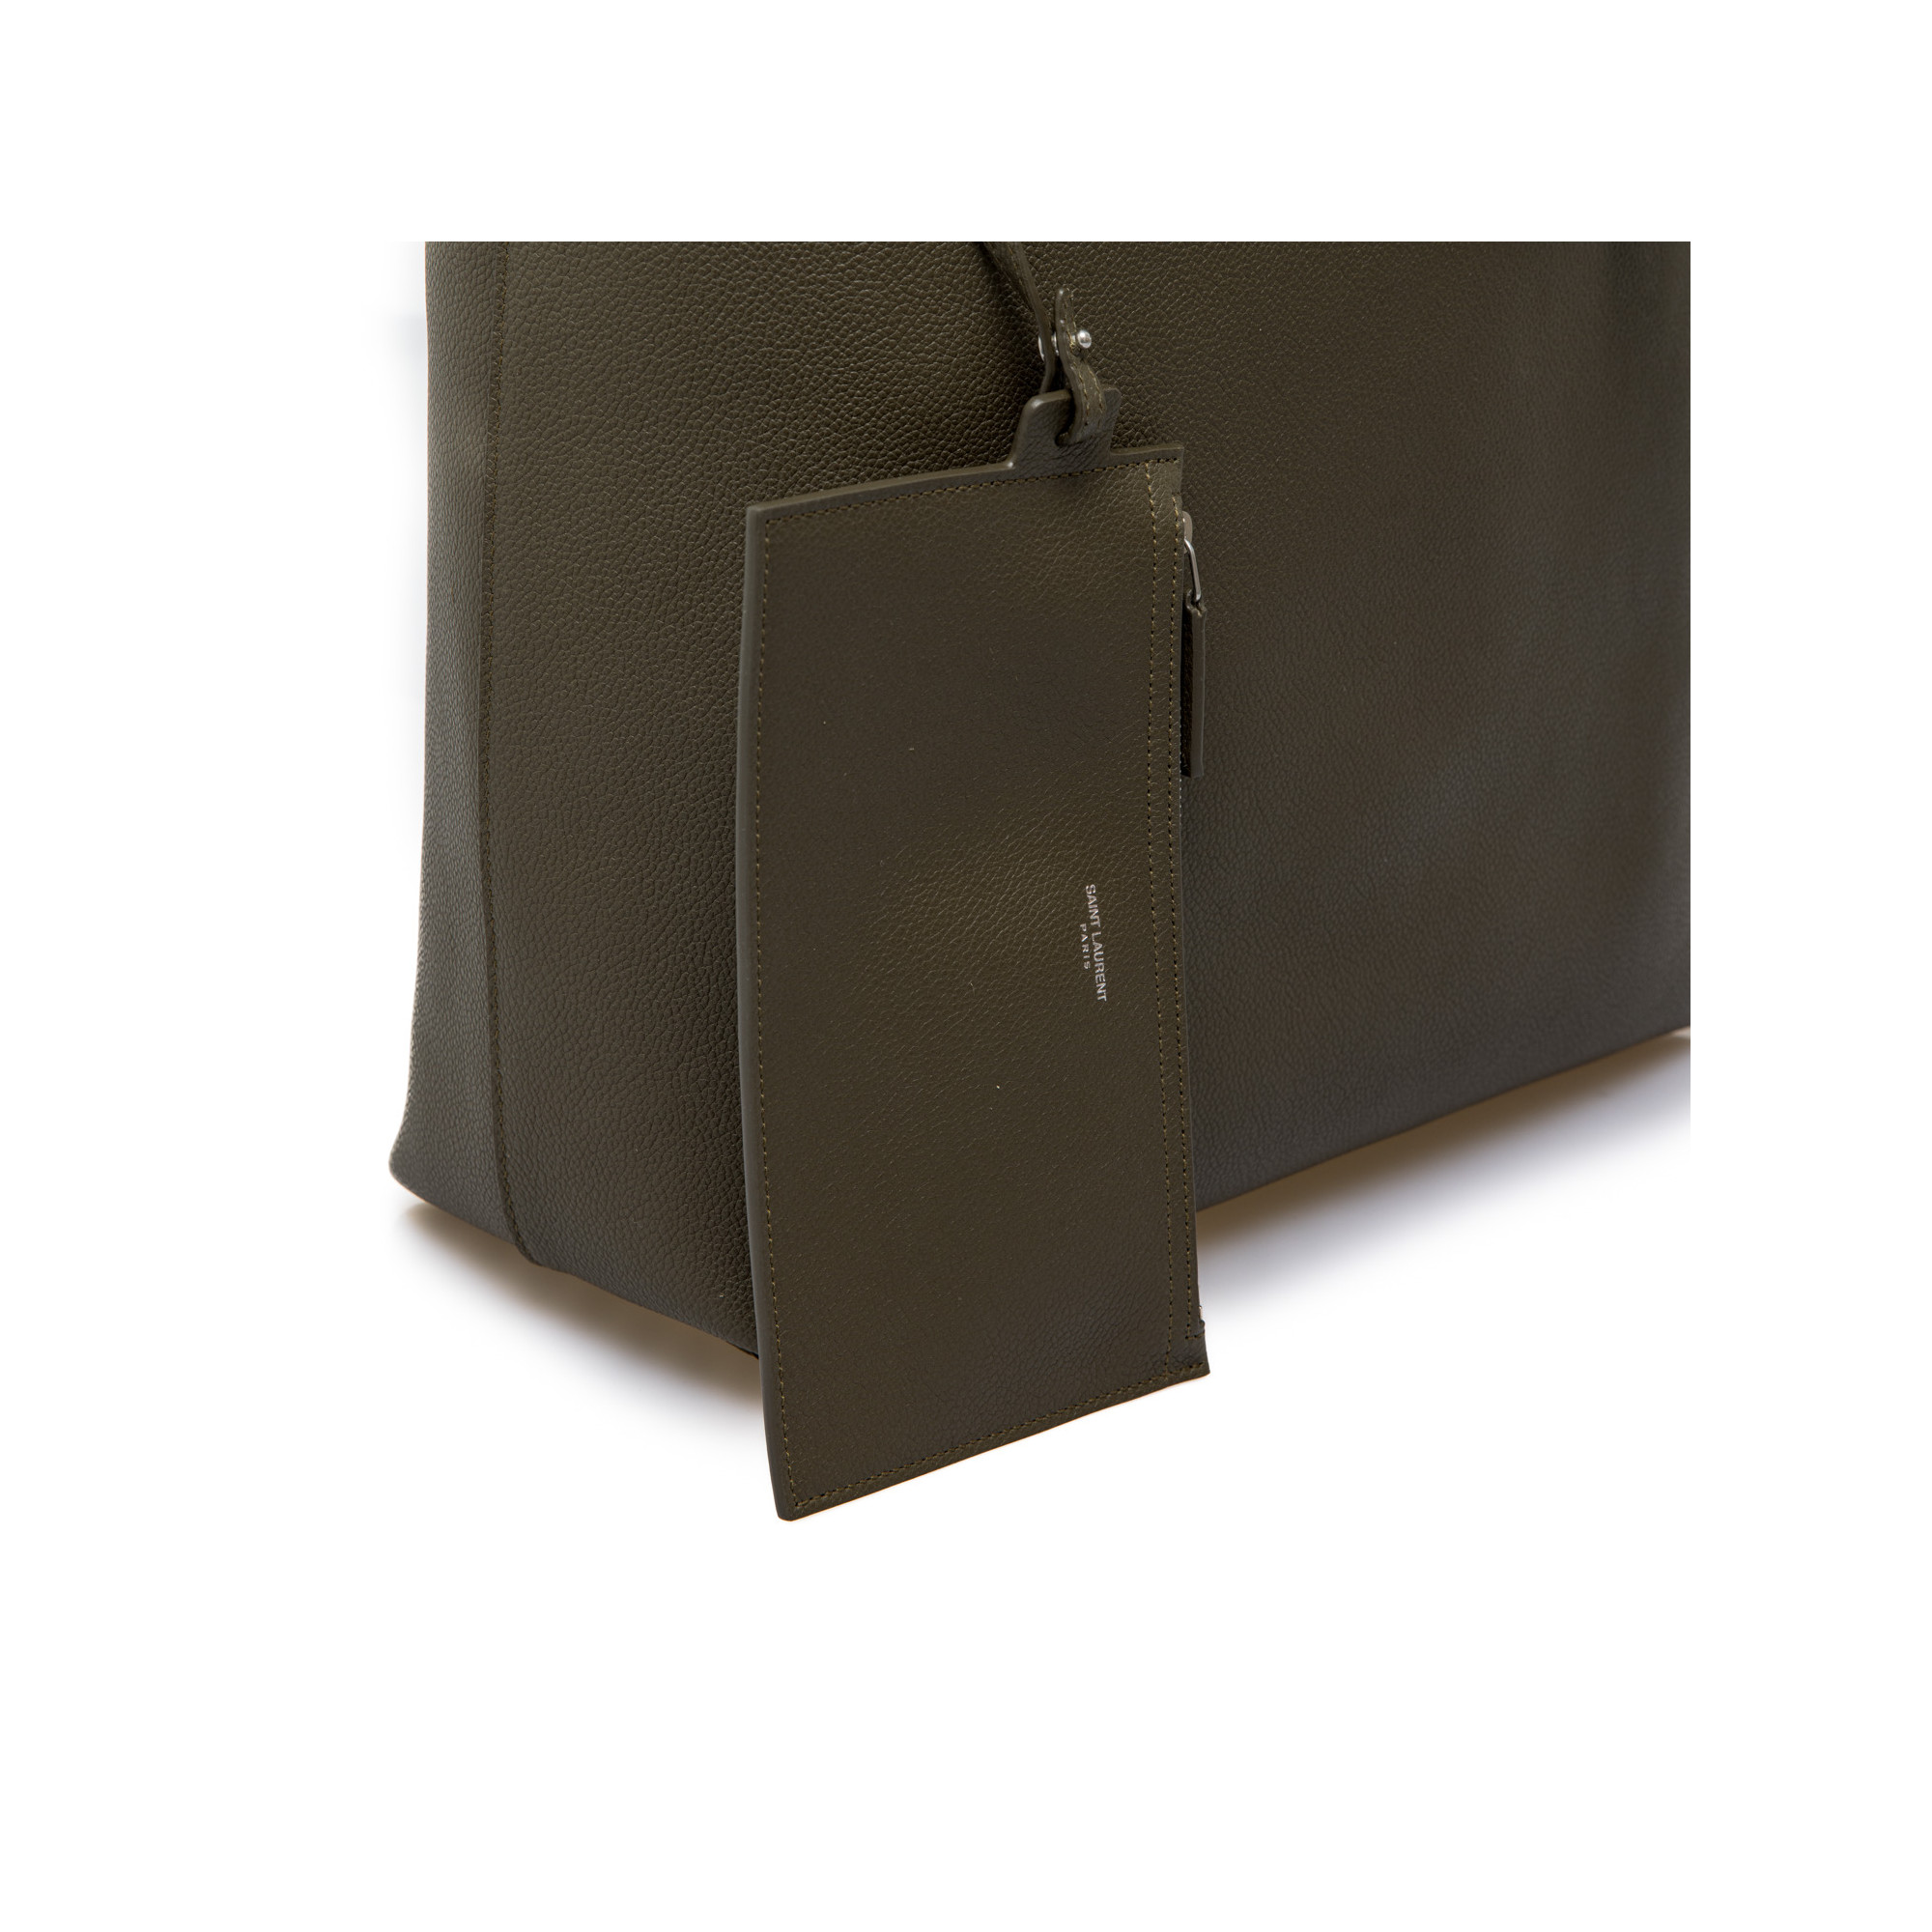 Bold Leather Tote Bag in Black - Saint Laurent